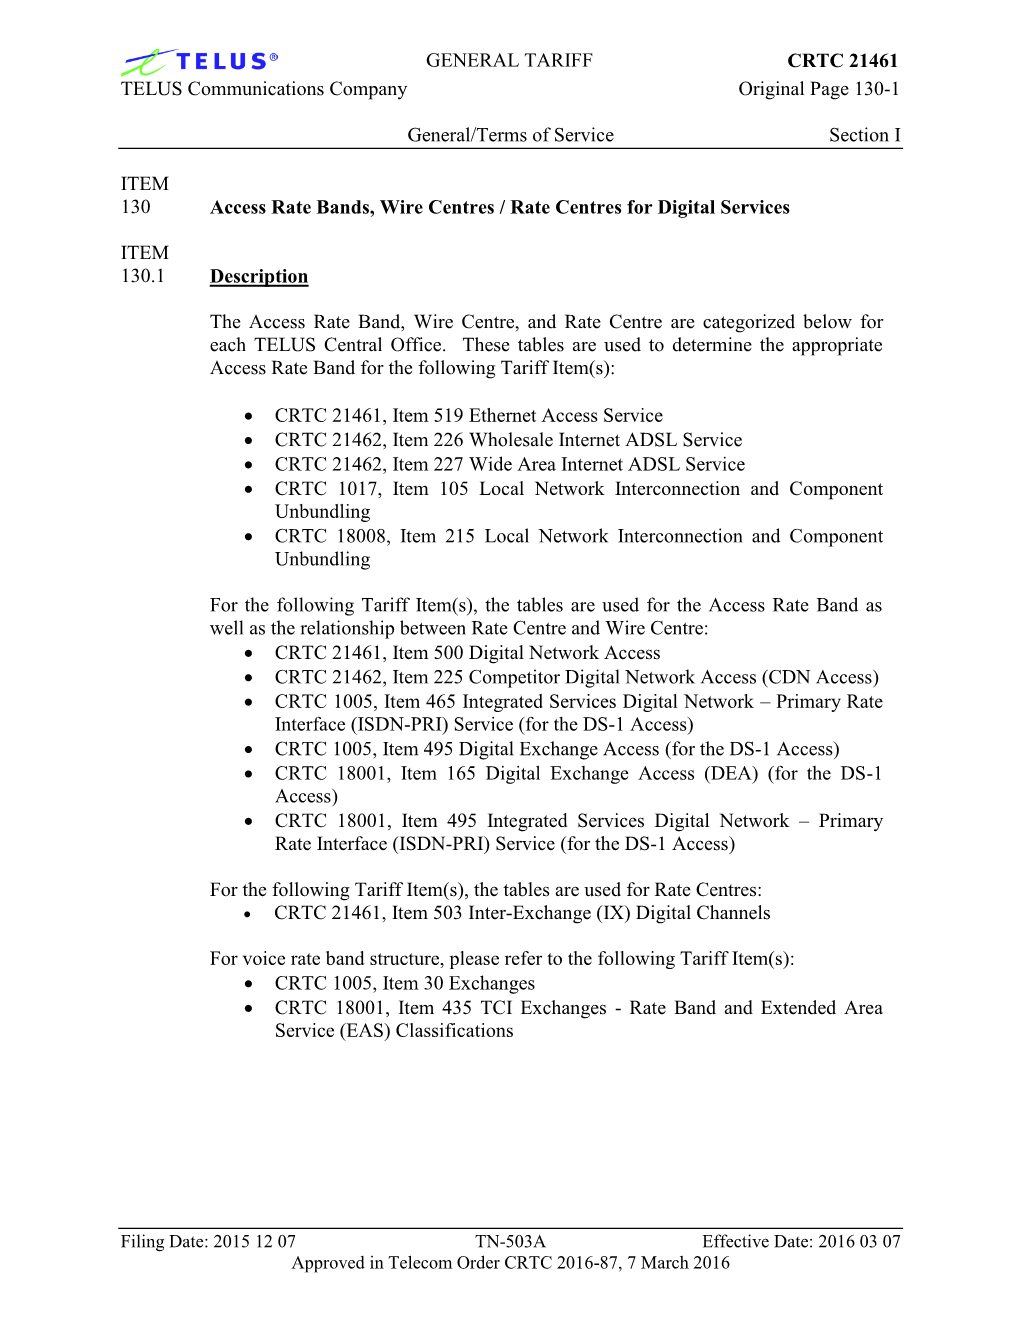 GENERAL TARIFF CRTC 21461 TELUS Communications Company Original Page 130-1